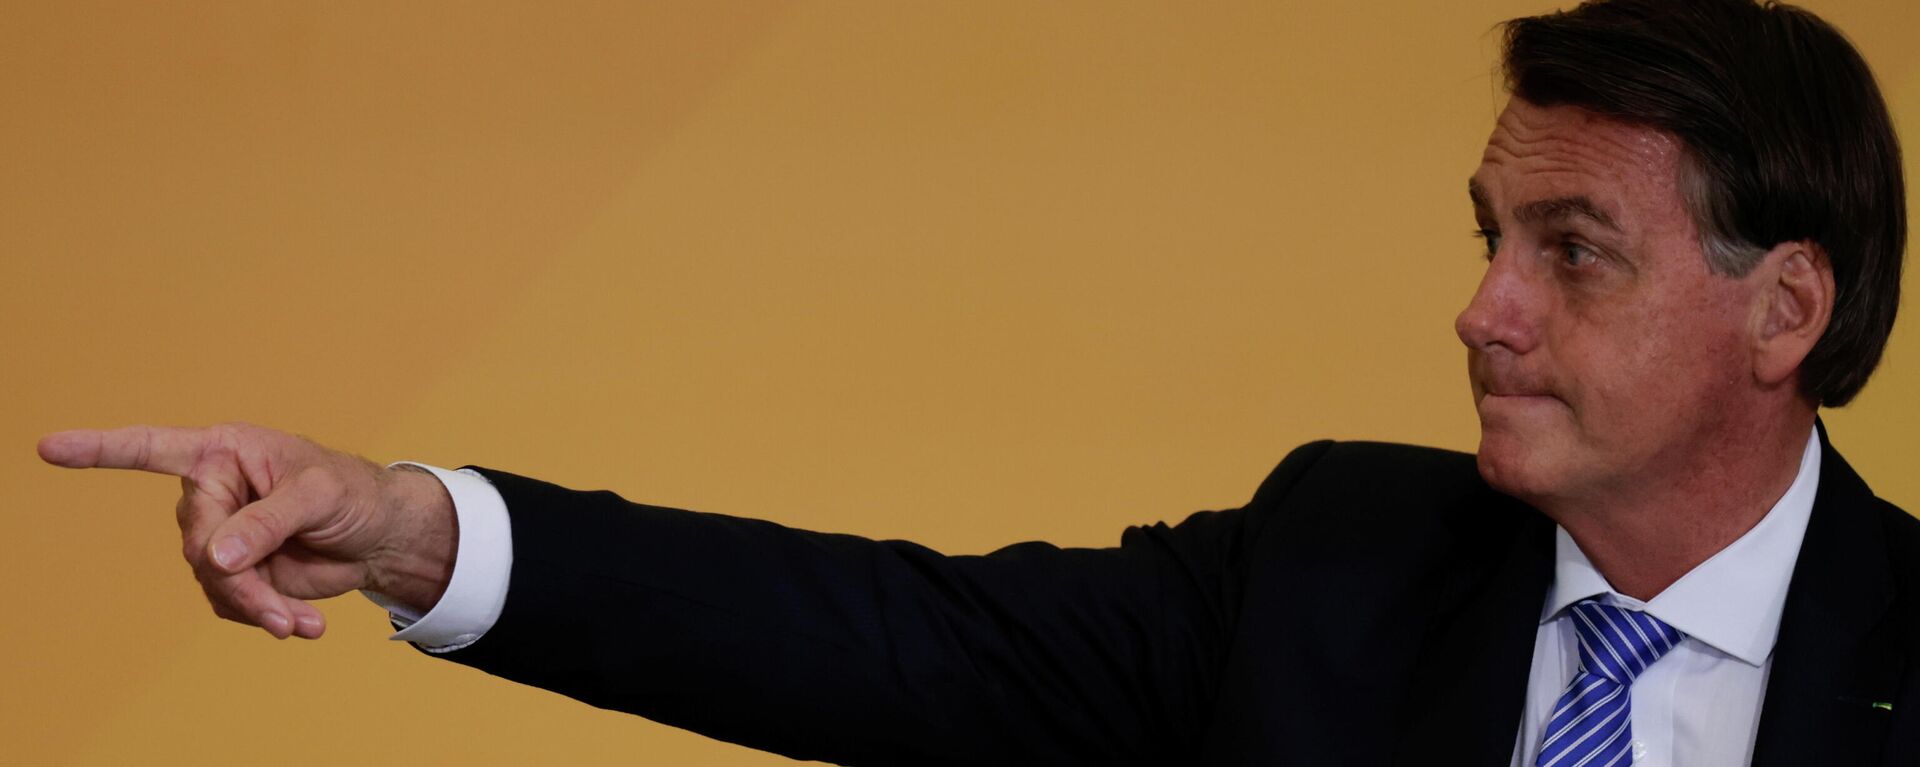 O presidente do Brasil Jair Bolsonaro gesticula durante o lançamento do programa Brasil Fraterno, no Palácio do Planalto em Brasília, Brasil, 11 de novembro de 2021 - Sputnik Brasil, 1920, 25.11.2021